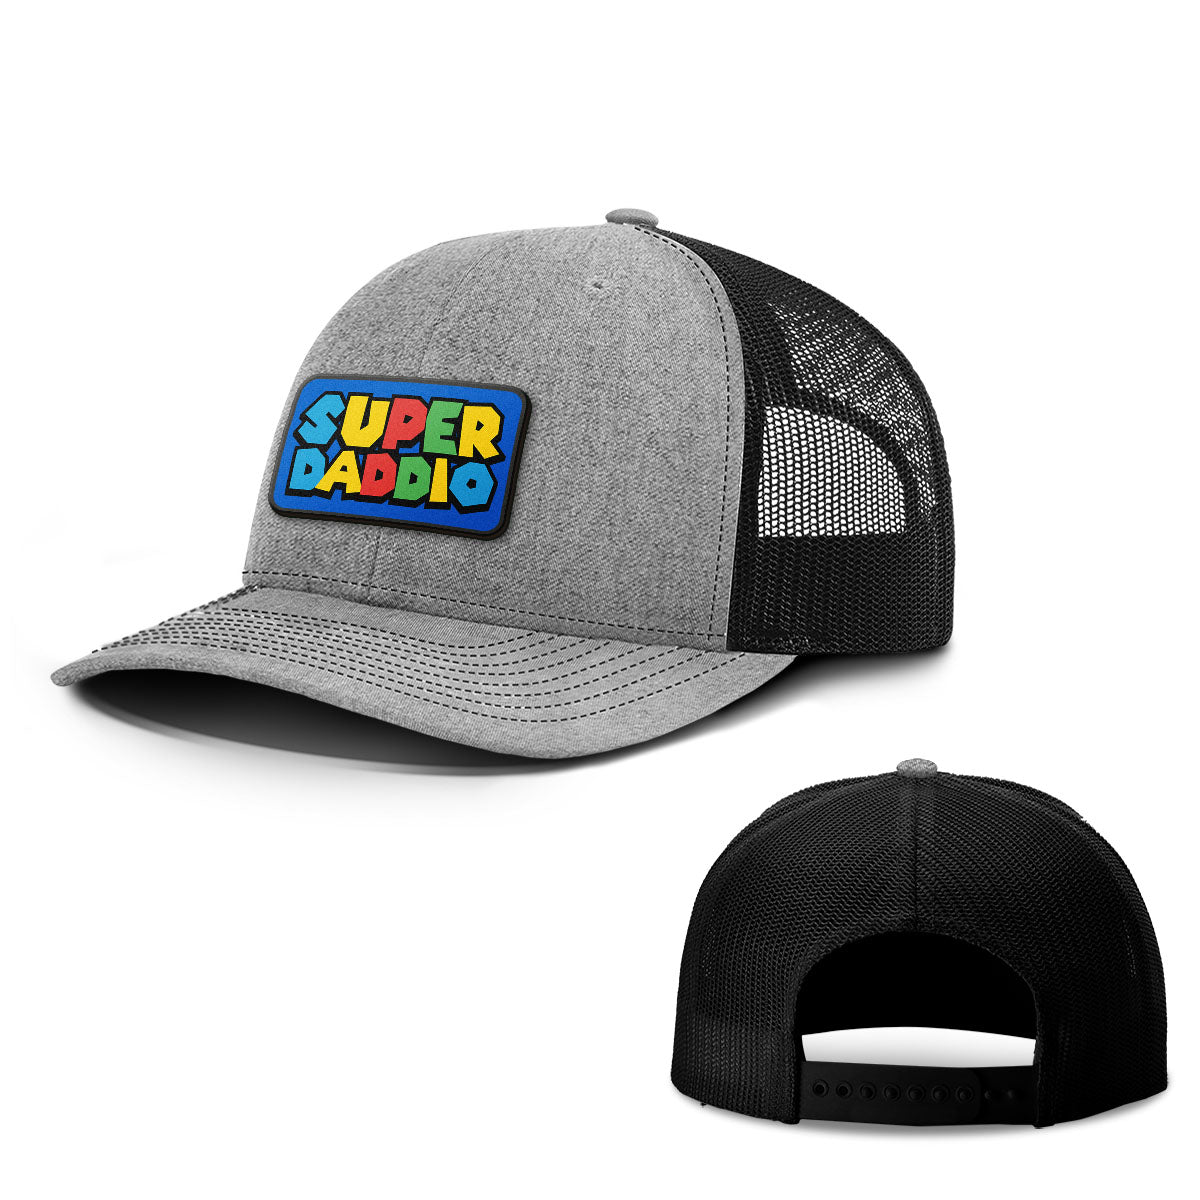 Super Daddio Patch Hats